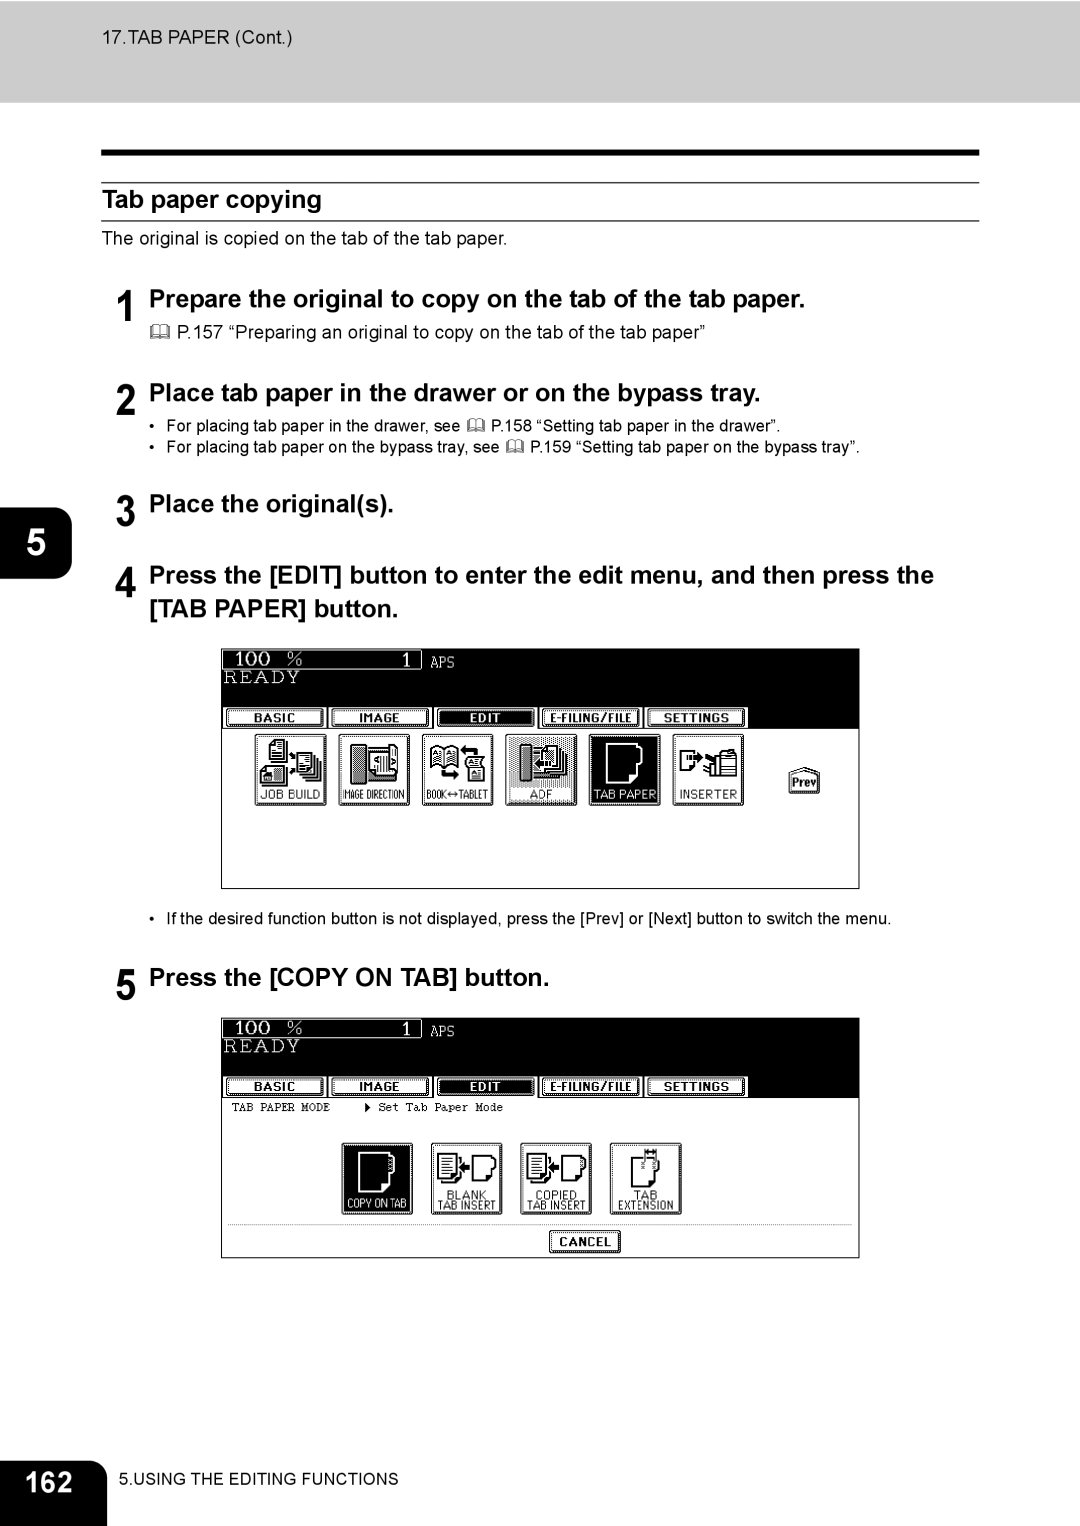 Toshiba 720 162, Tab paper copying, Prepare the original to copy on the tab of the tab paper, Press the Copy on TAB button 